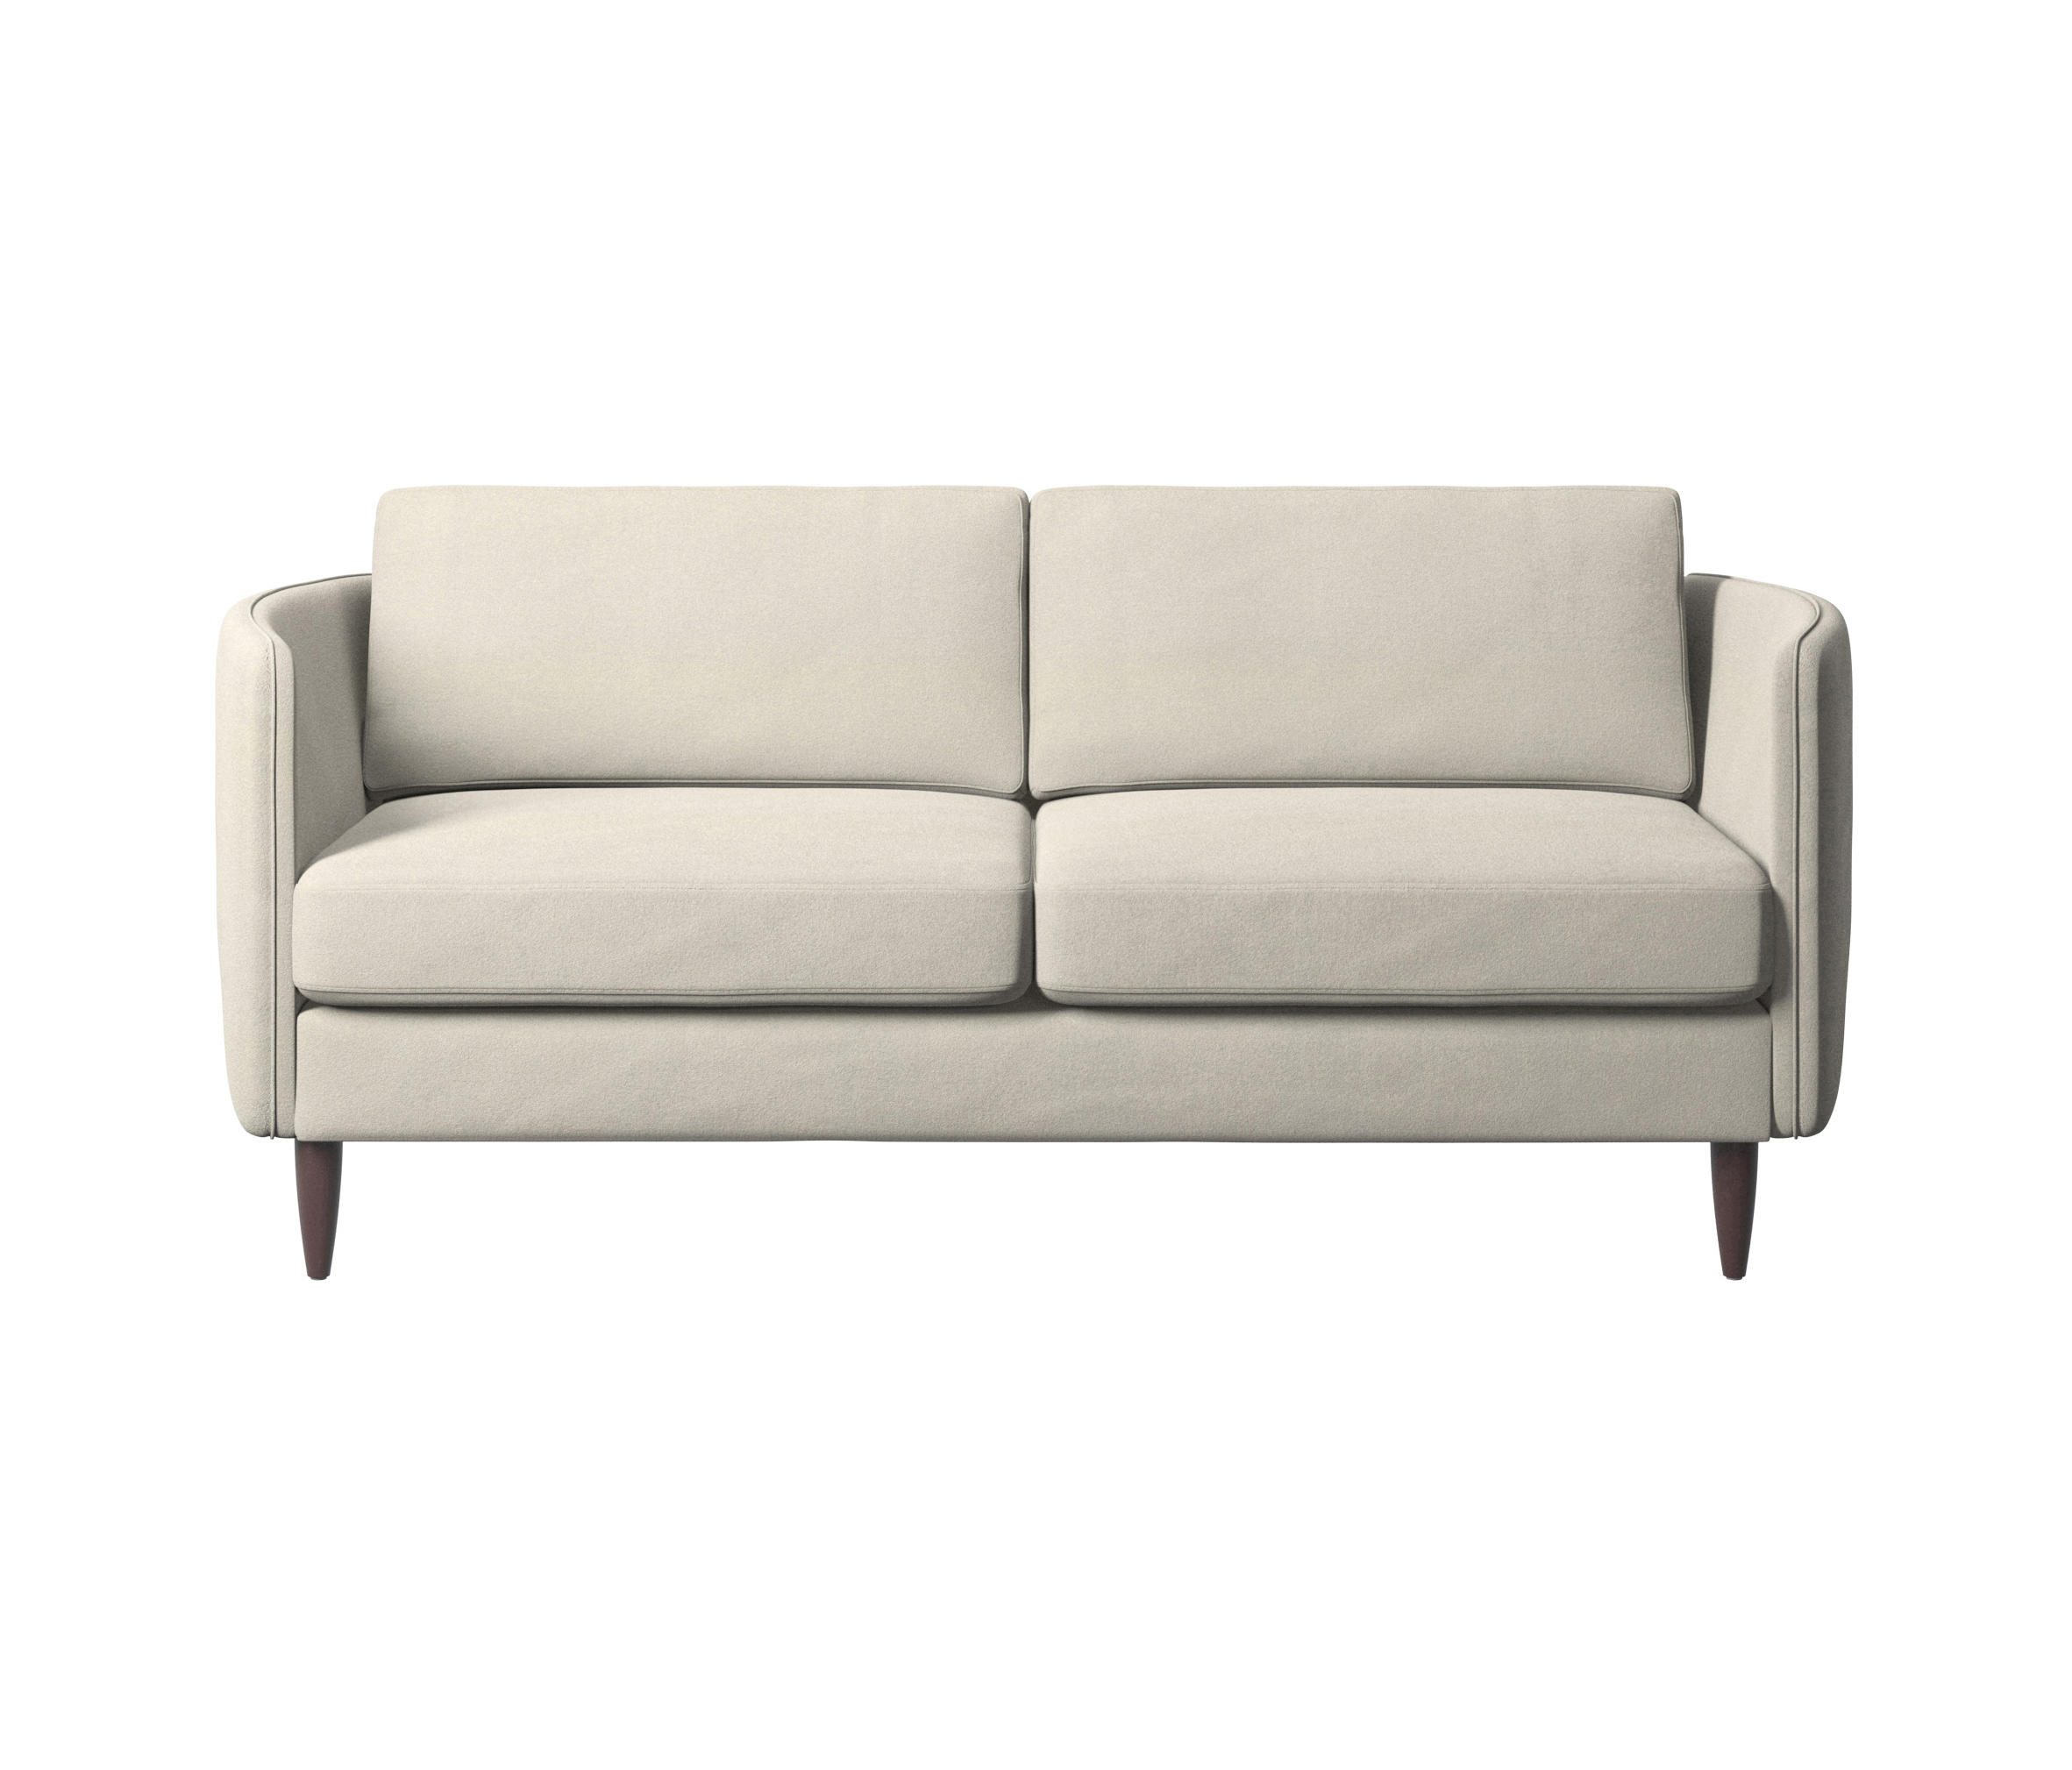 Lille sofa 2 seater & designer furniture | Architonic